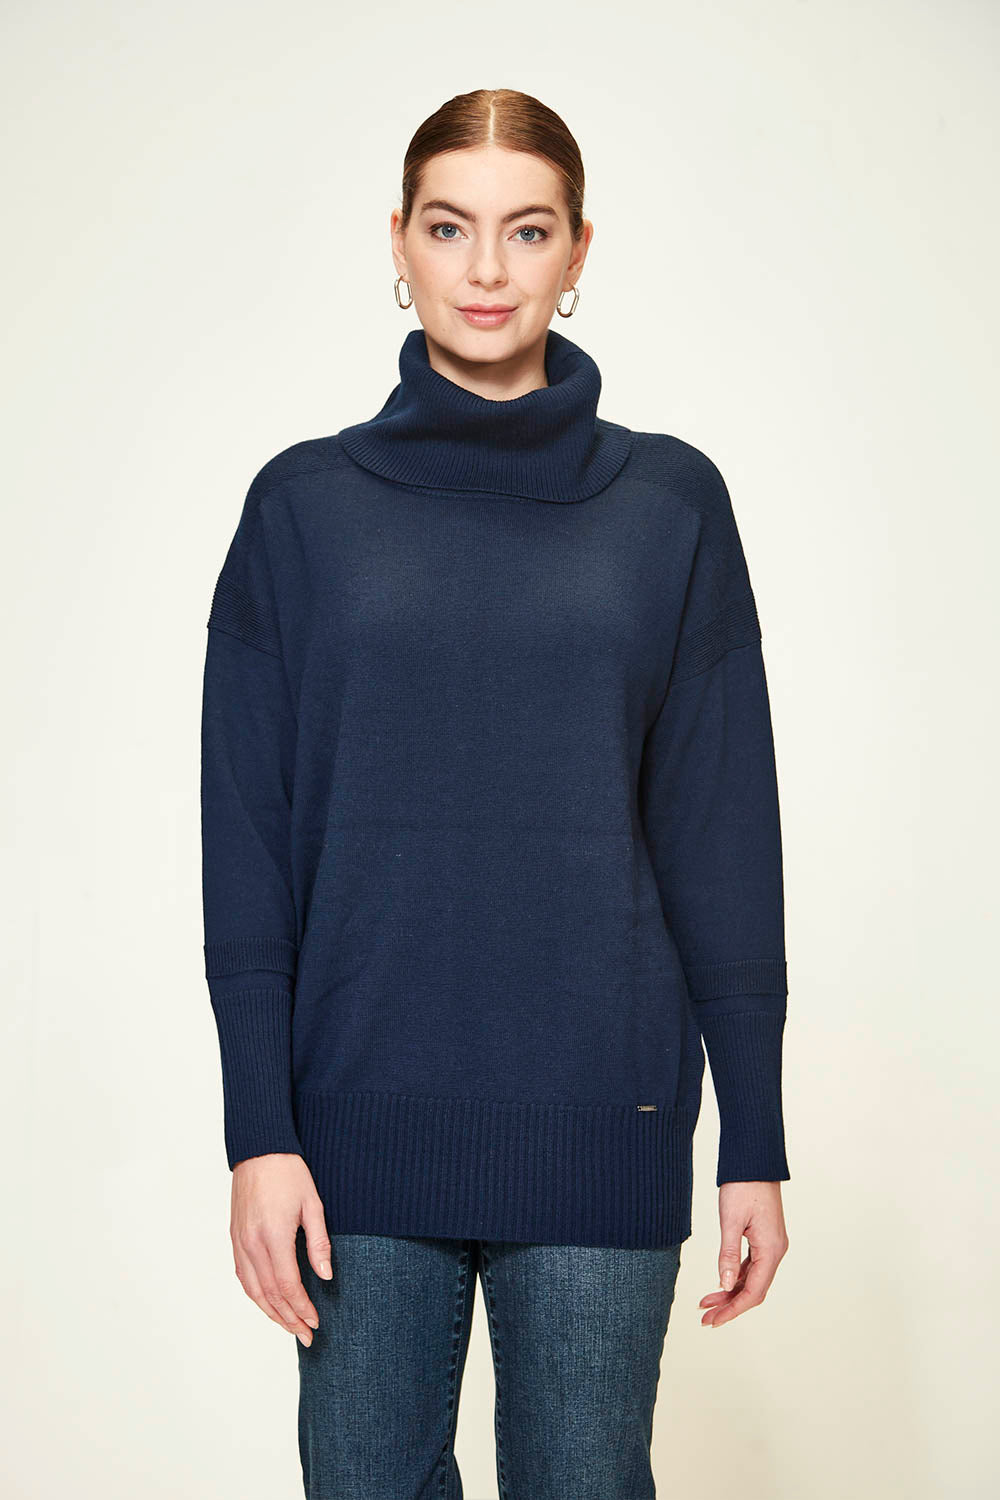 Remi Sweater - Ink